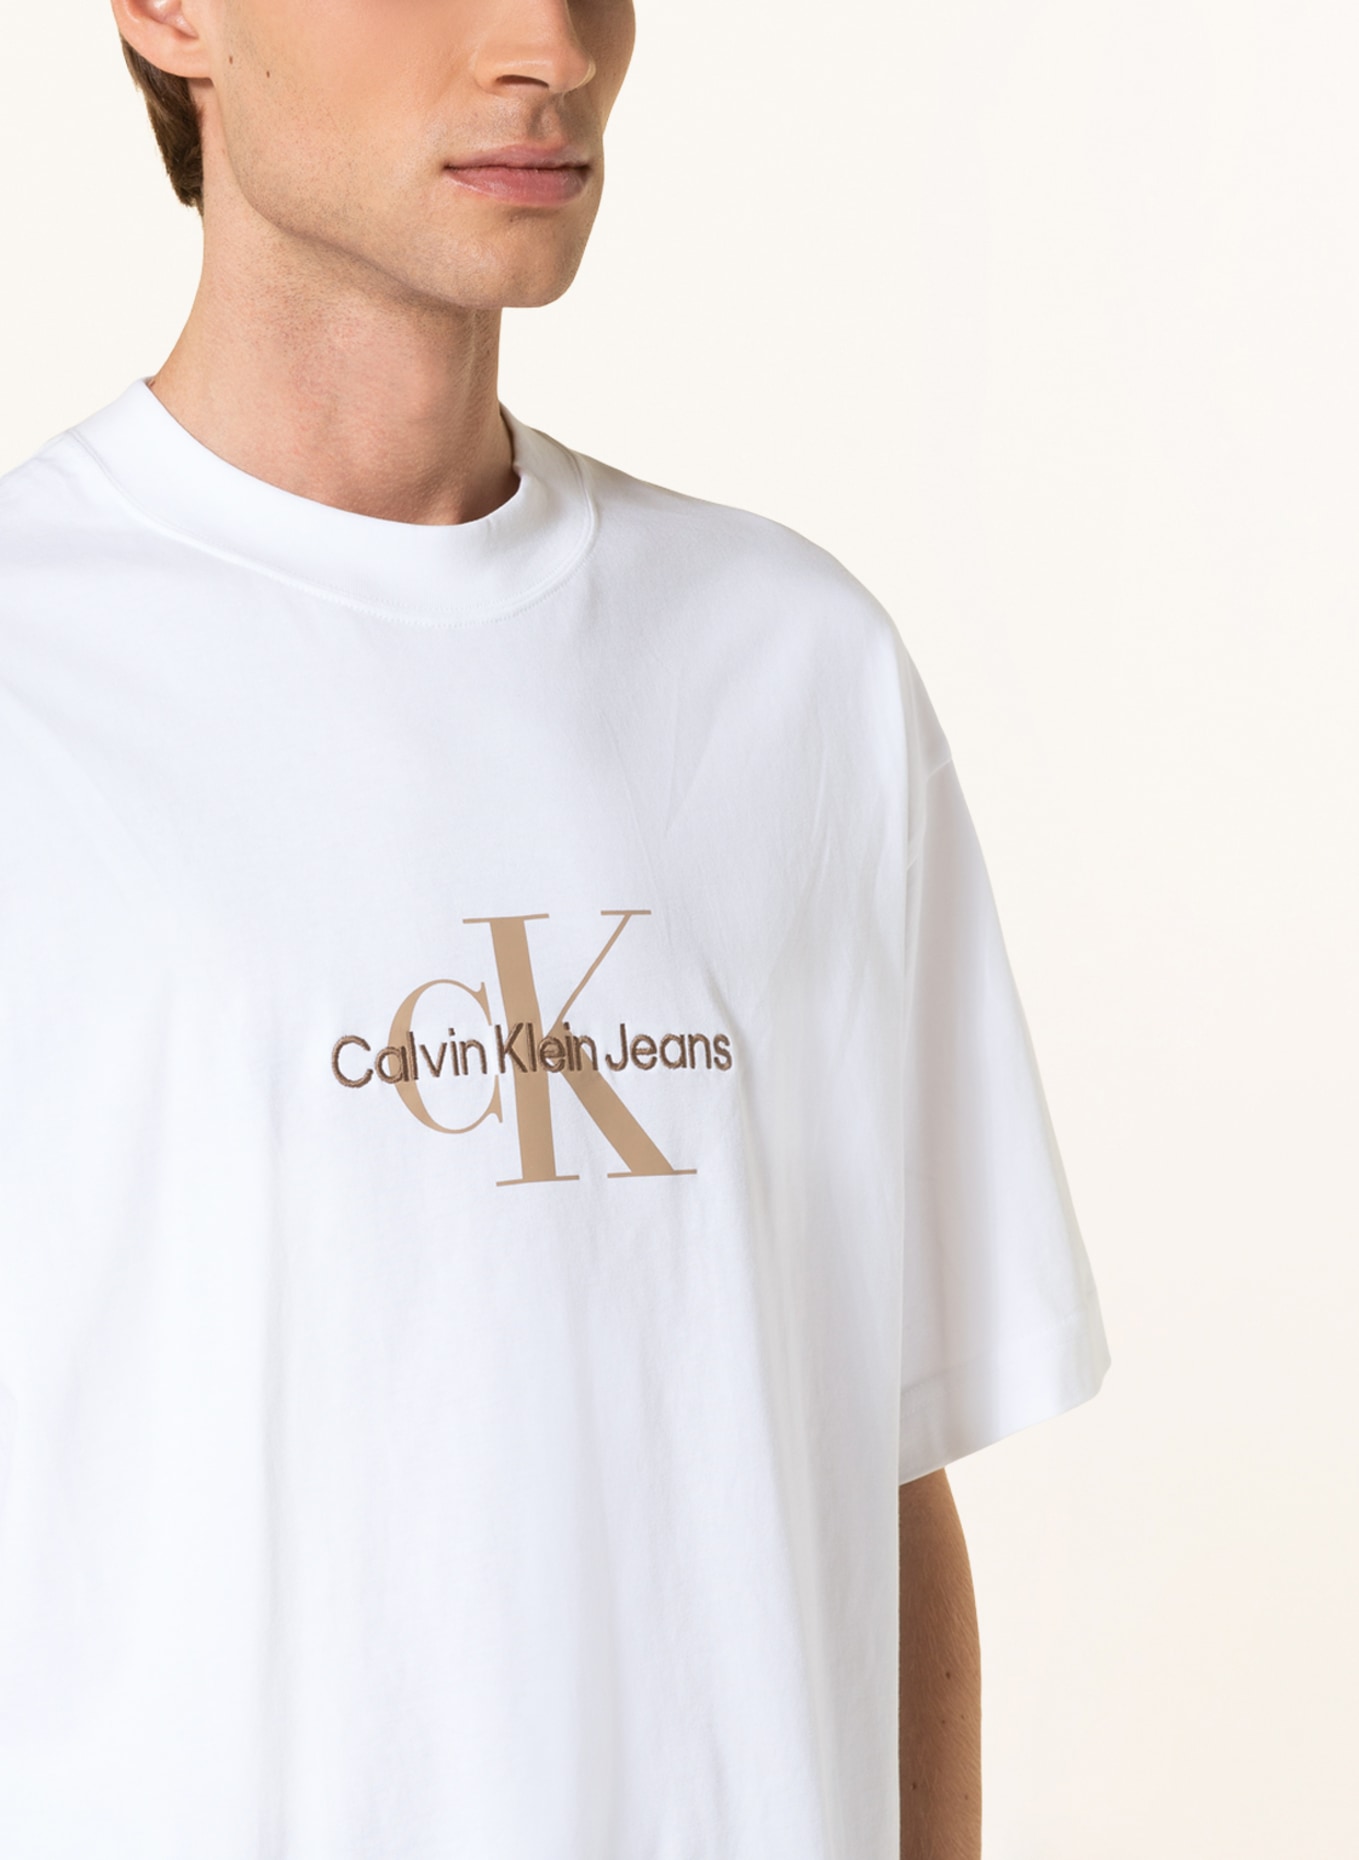 Jeans Klein Calvin weiss Oversized-Shirt in